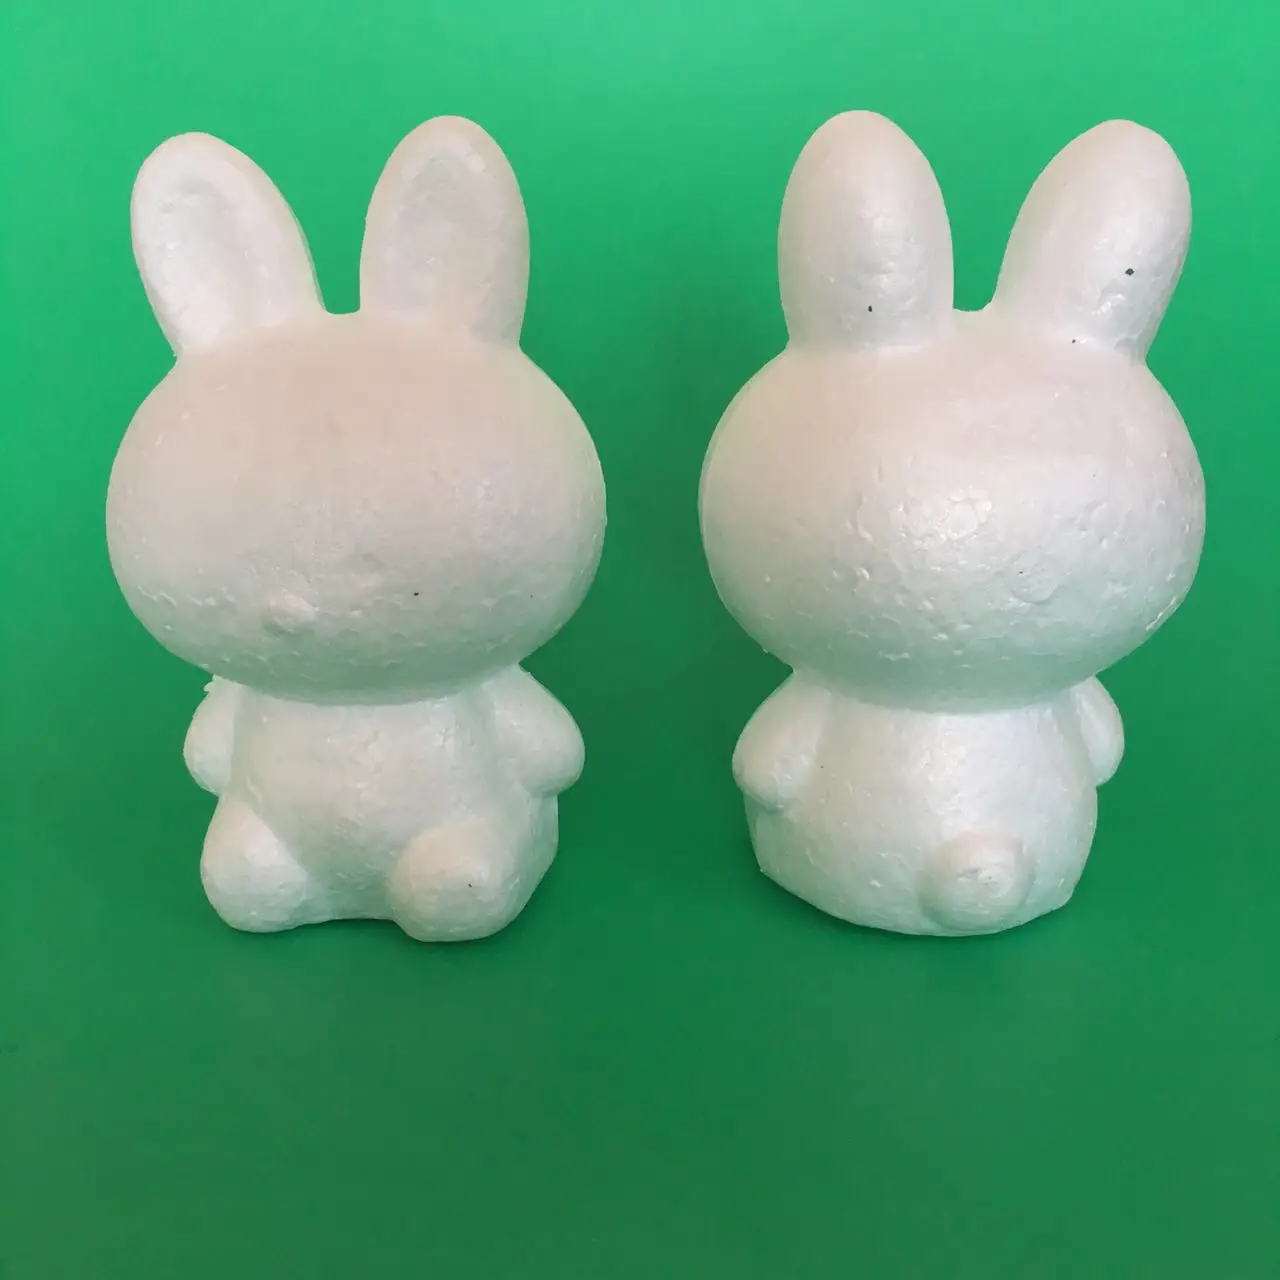 Modeling Rabbit White Polystyrene Foam Ball Styrofoam Crafts For Party Decor Hot 